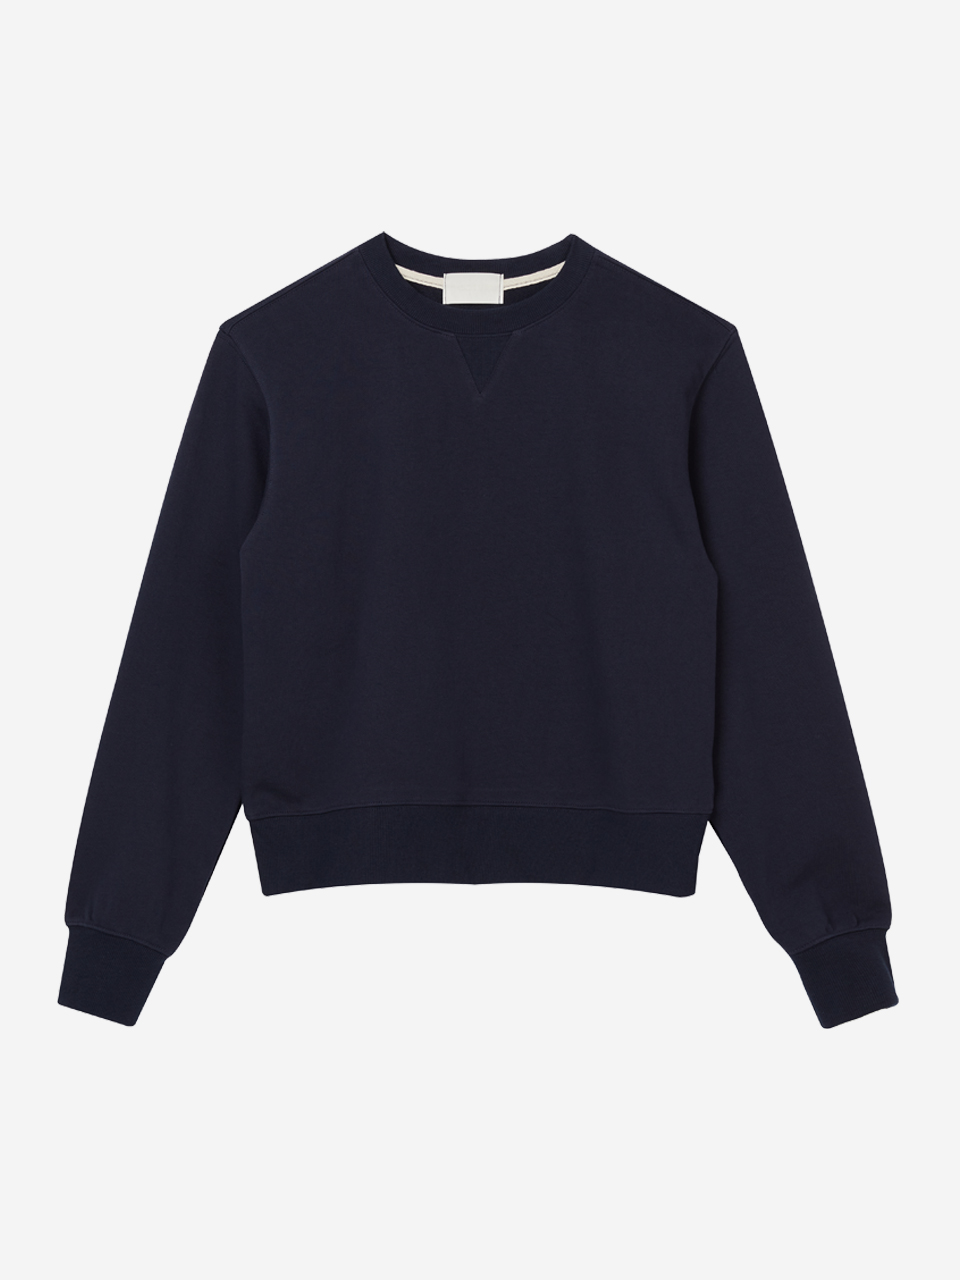 essential classic sweatshirts (navy)